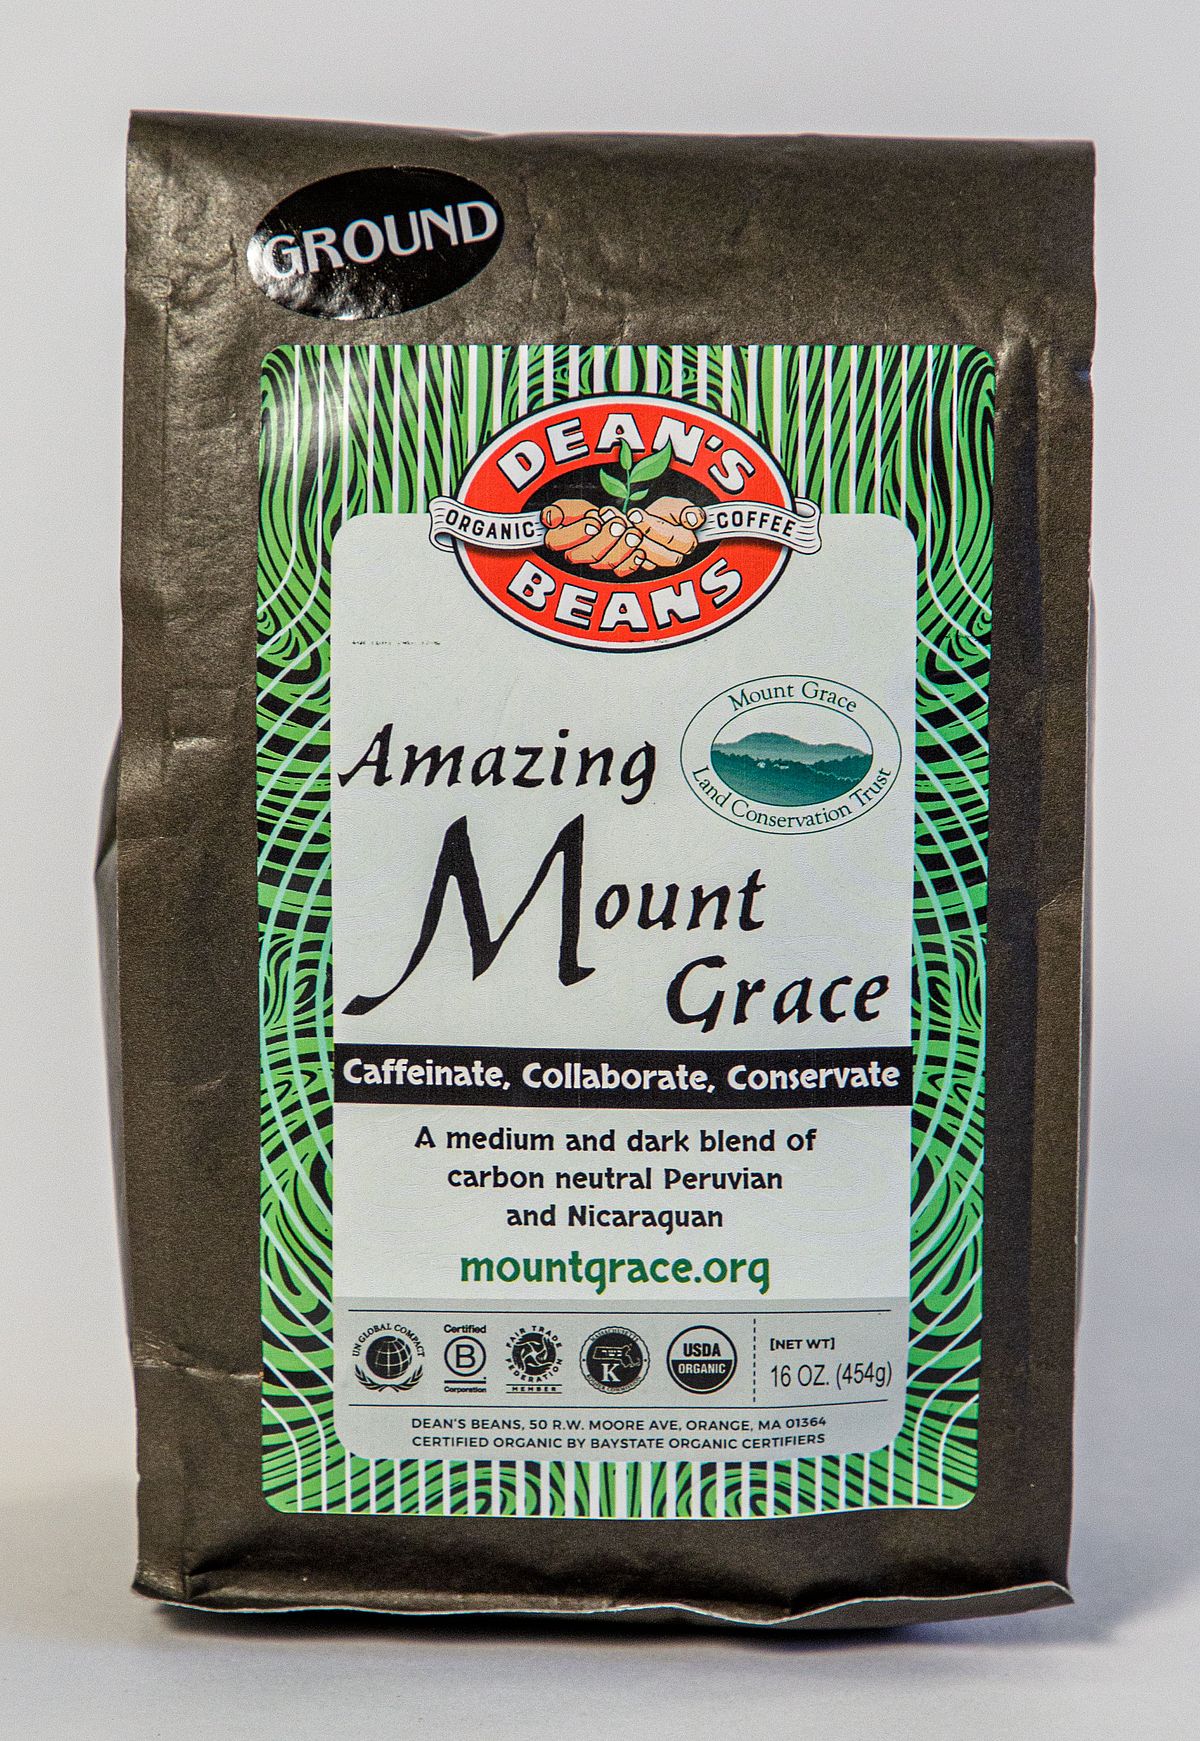 Dean’s Beans “Amazing Mount Grace” Coffee